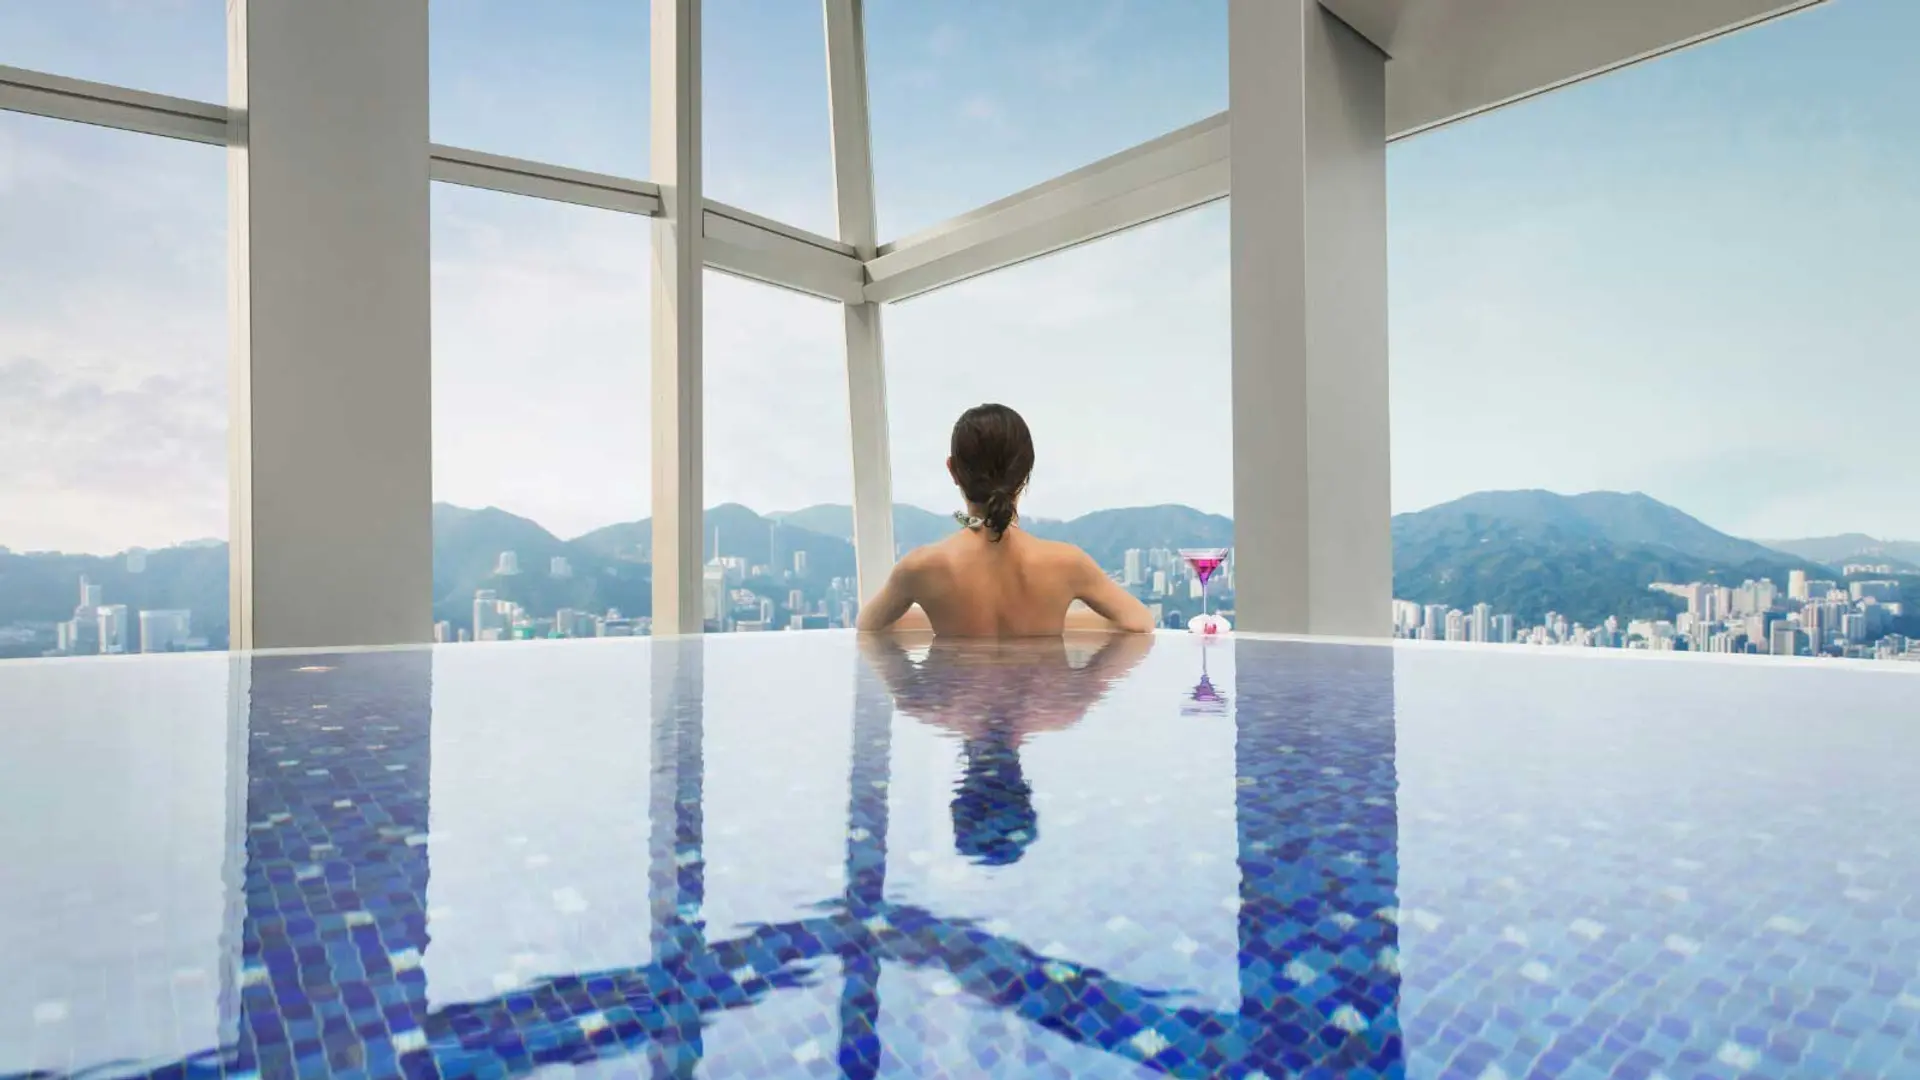 Hotel review Service & Facilities' - The Ritz-Carlton Hong Kong - 0